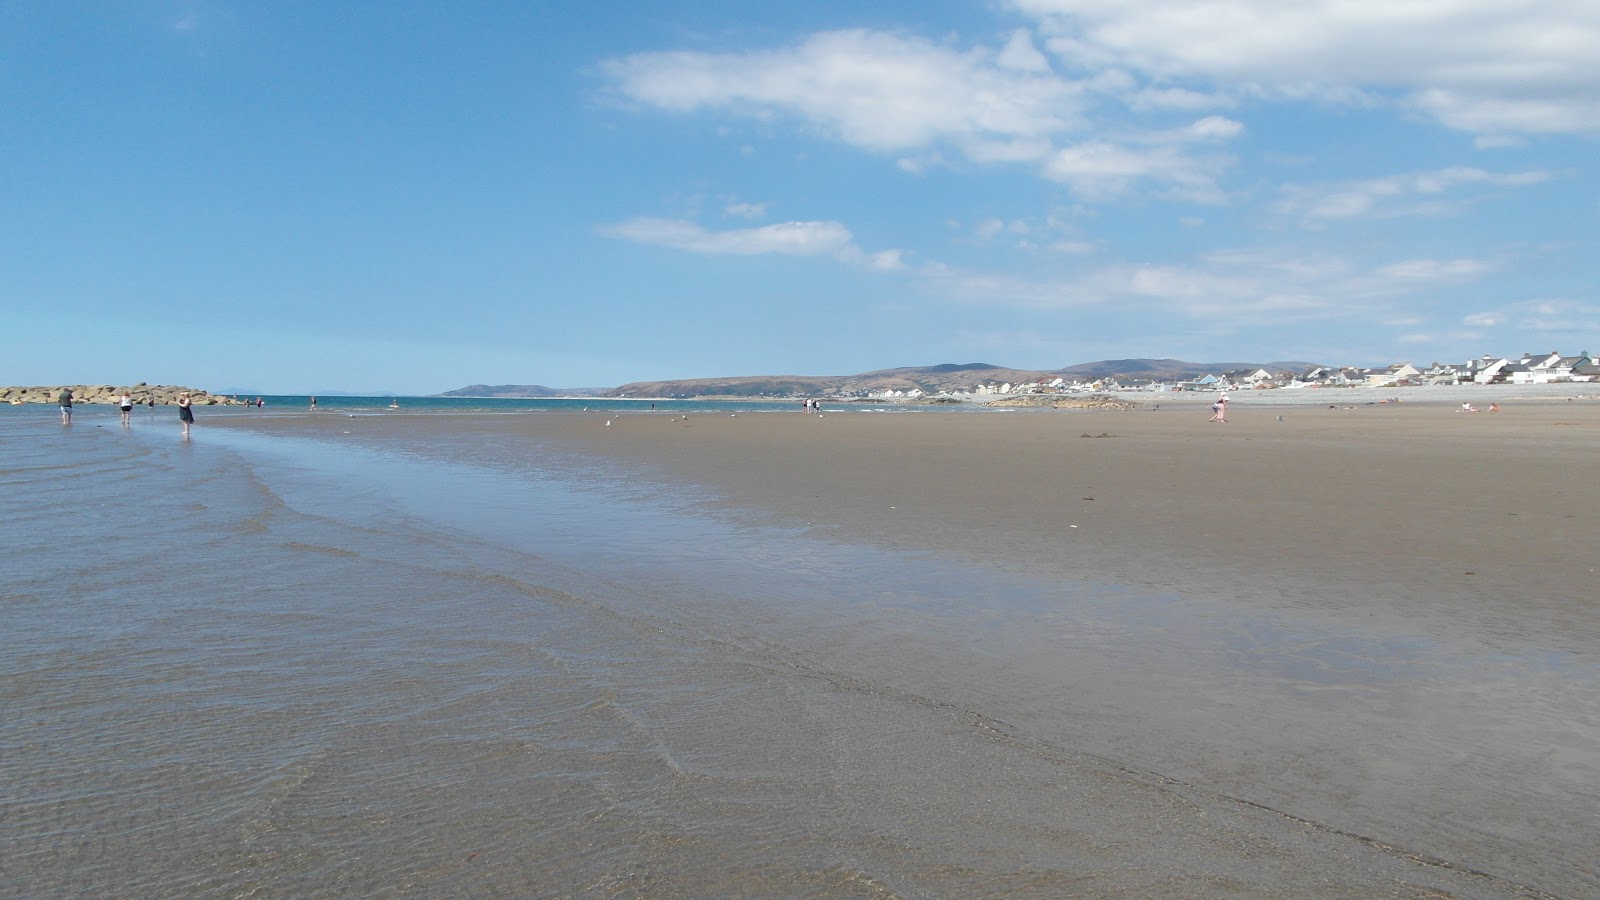 Zdjęcie Plaża Borth i osada